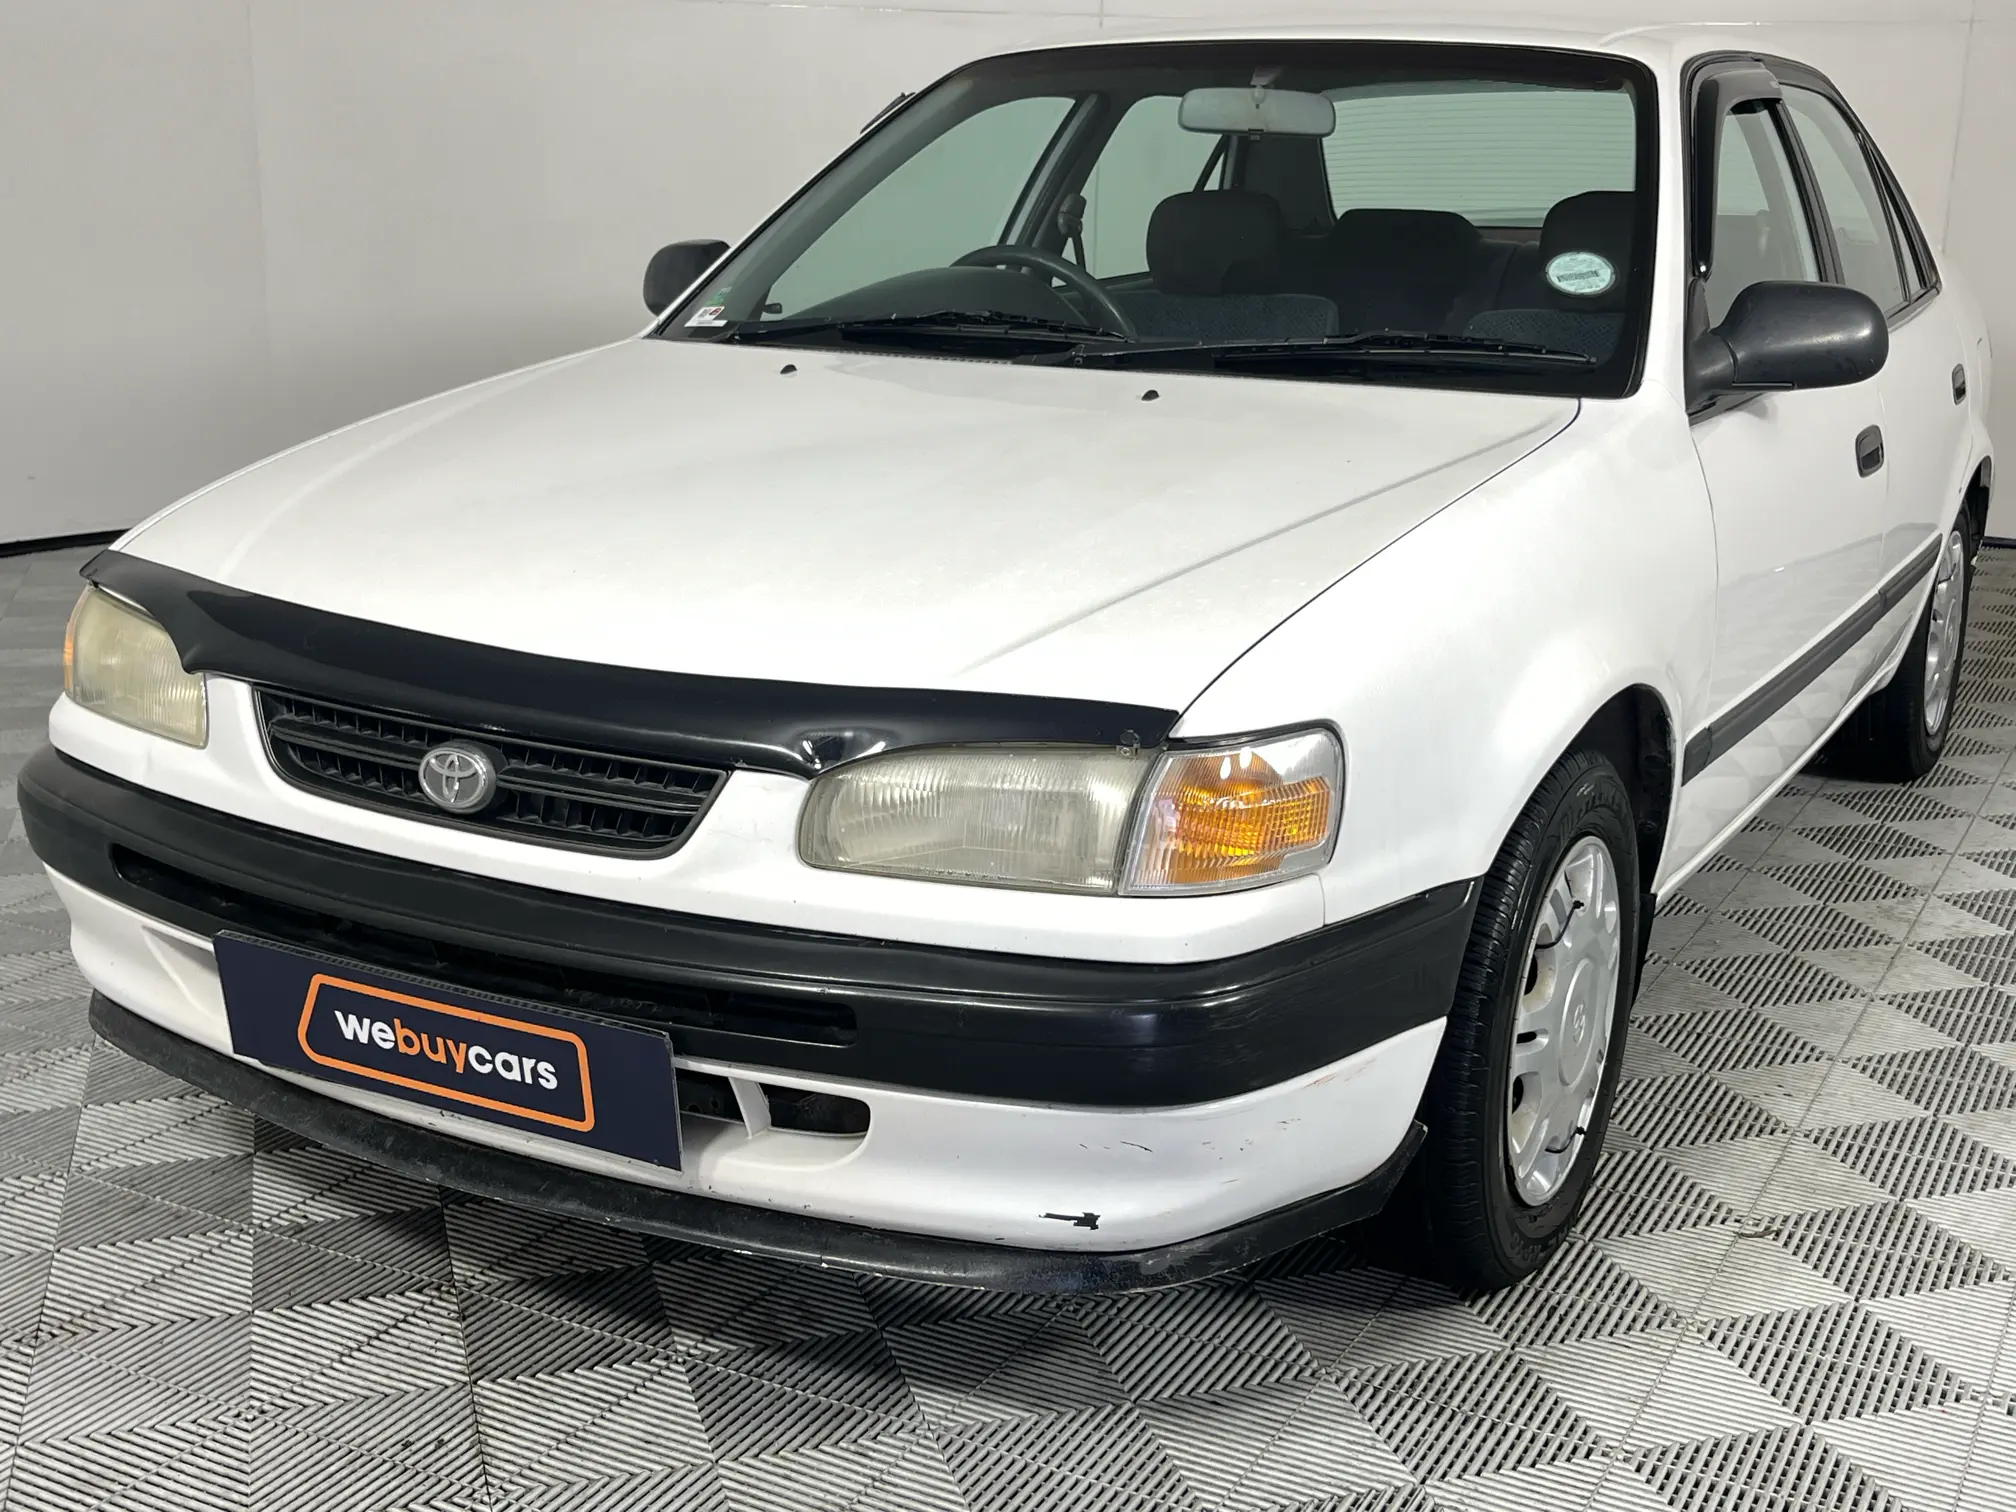 1998 Toyota Corolla 160i GLE